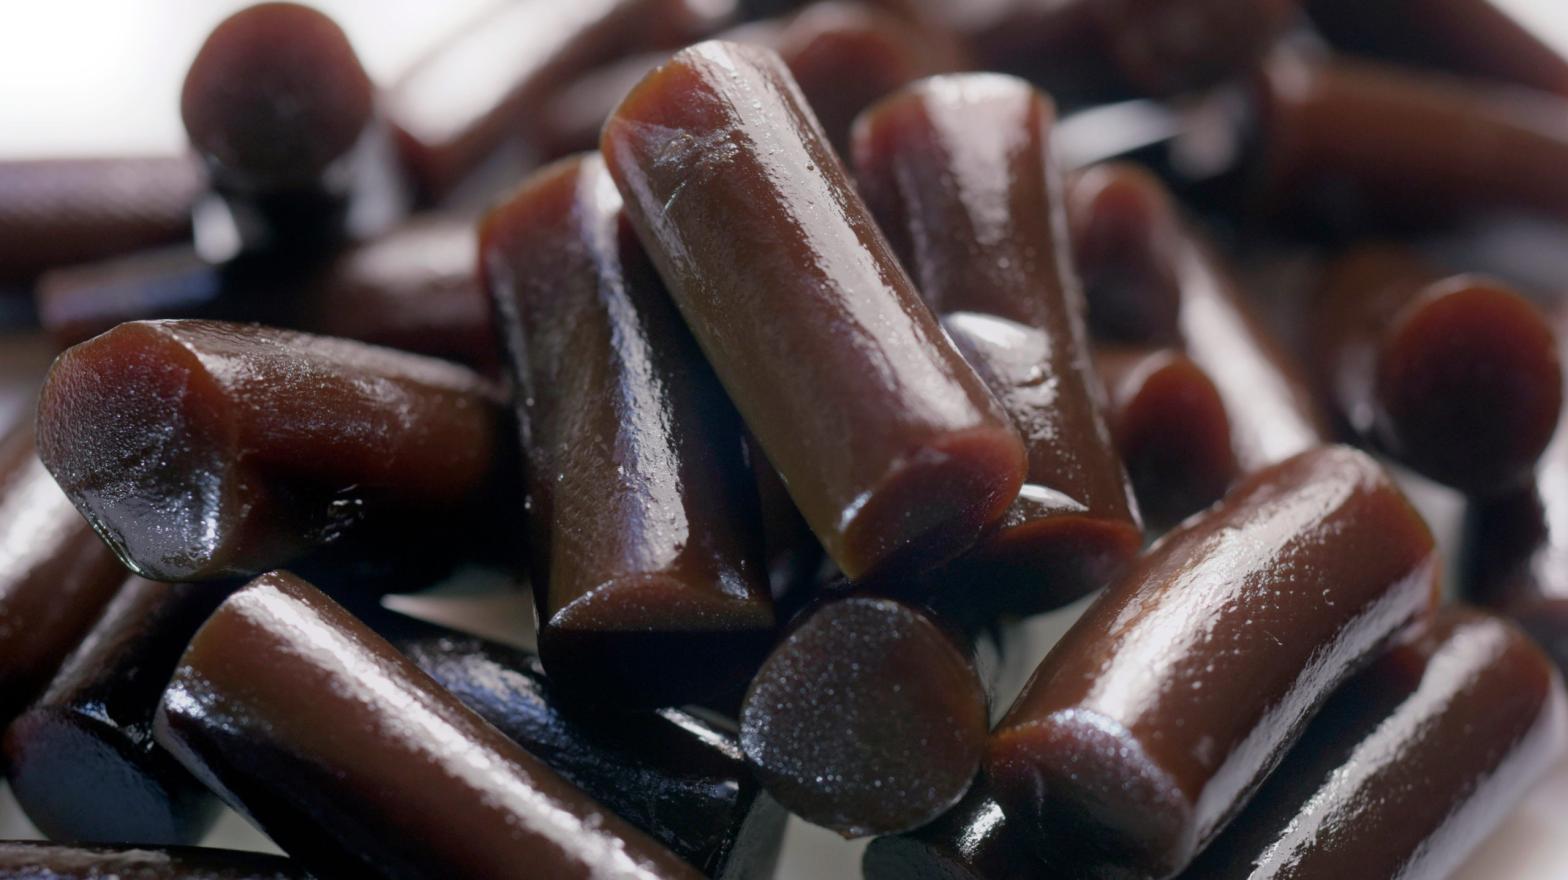 Black licorice candy. (Photo: Patrick Silson, AP)